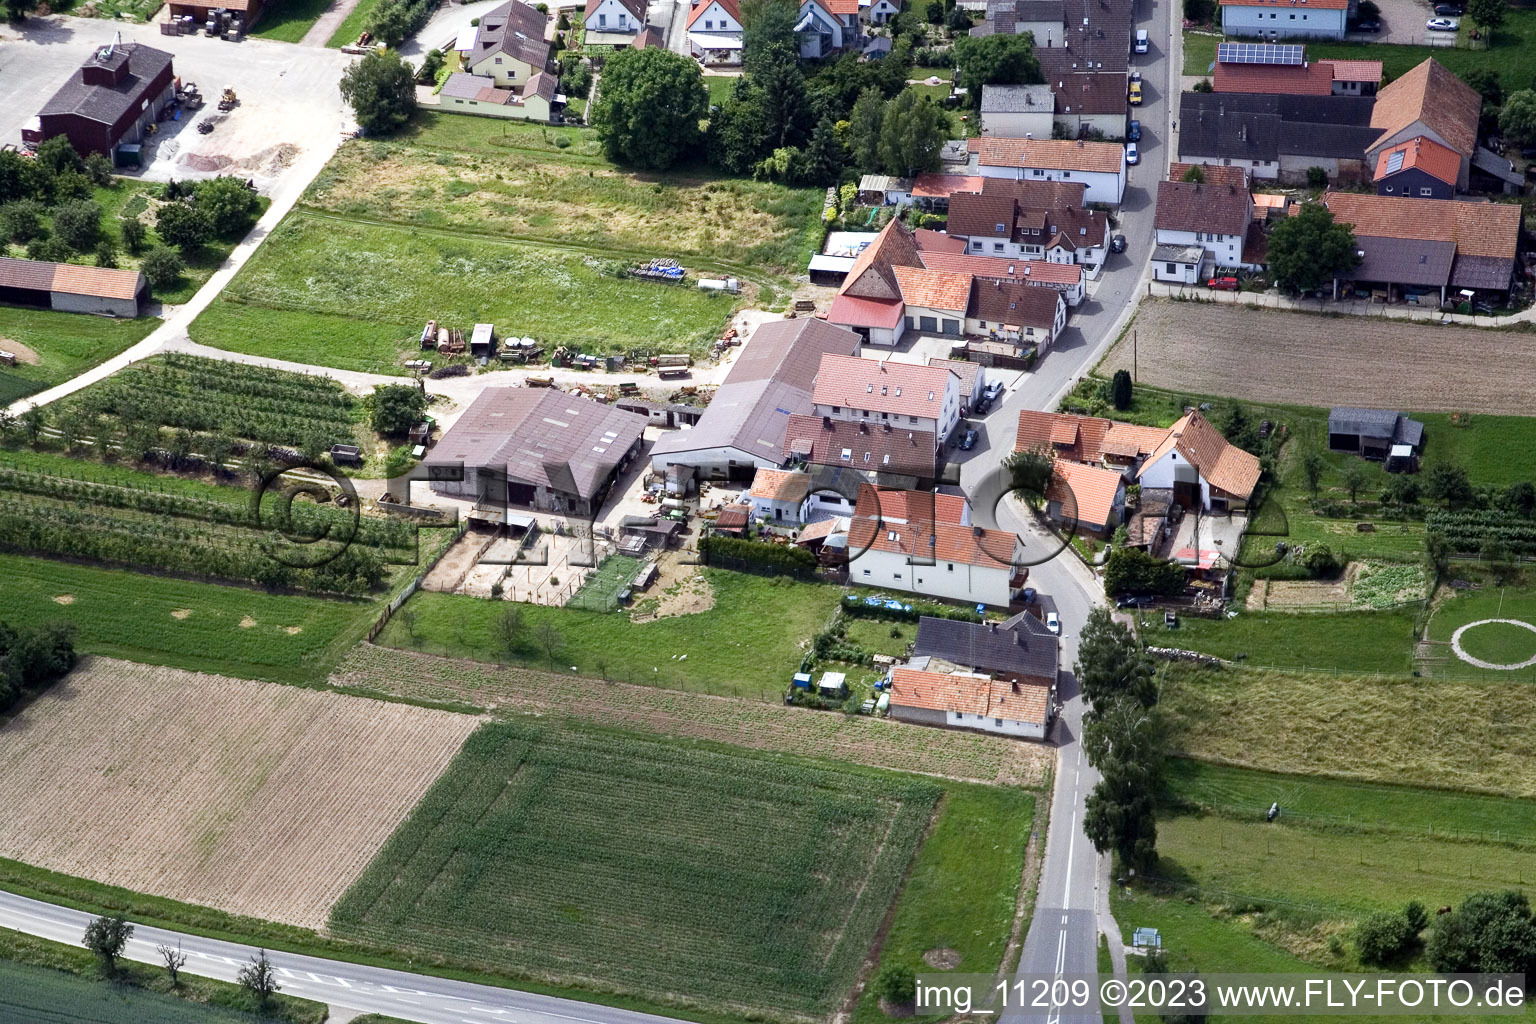 District Mühlhofen in Billigheim-Ingenheim in the state Rhineland-Palatinate, Germany seen from a drone